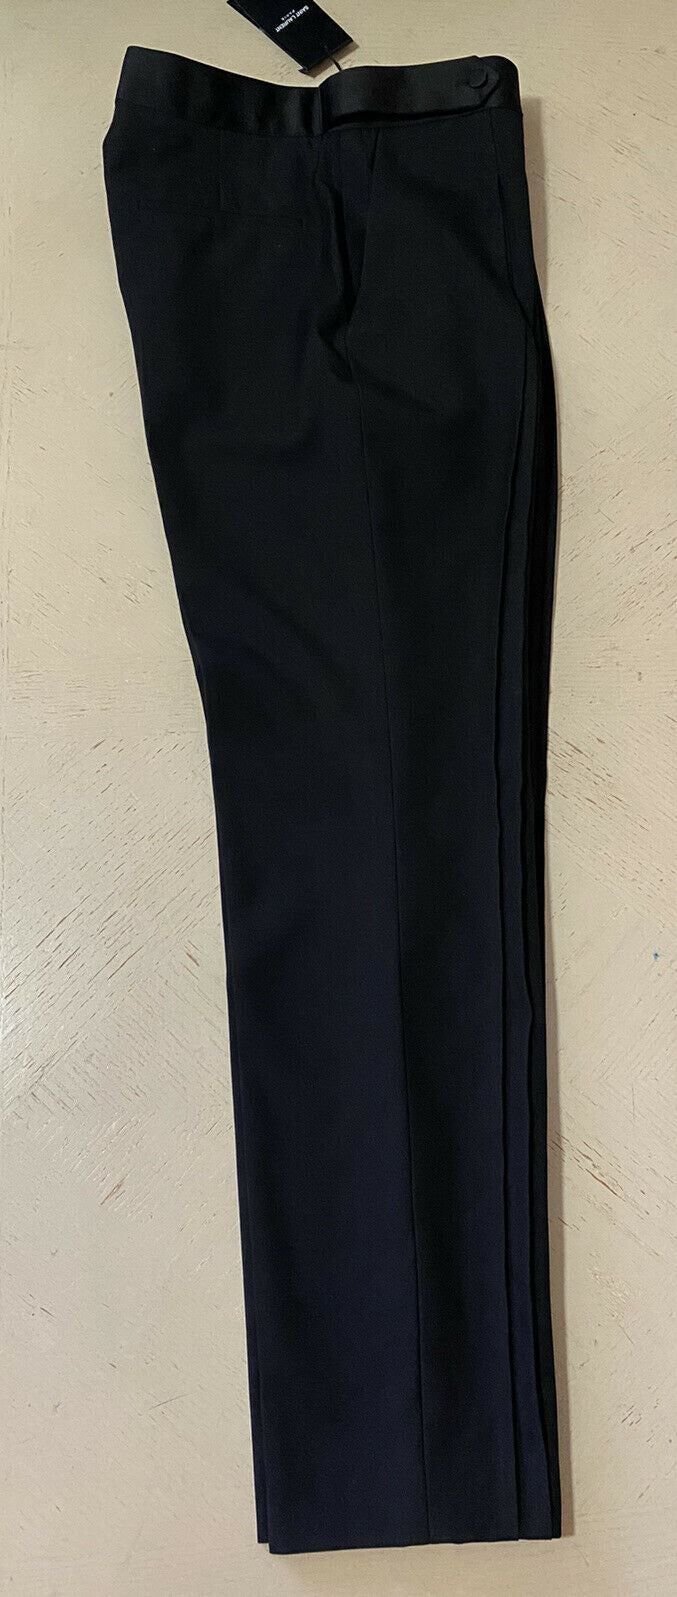 NWT $2790 Saint Laurent Men’s Gabardine Dress Pants Black 36 US/52 Eu Italy